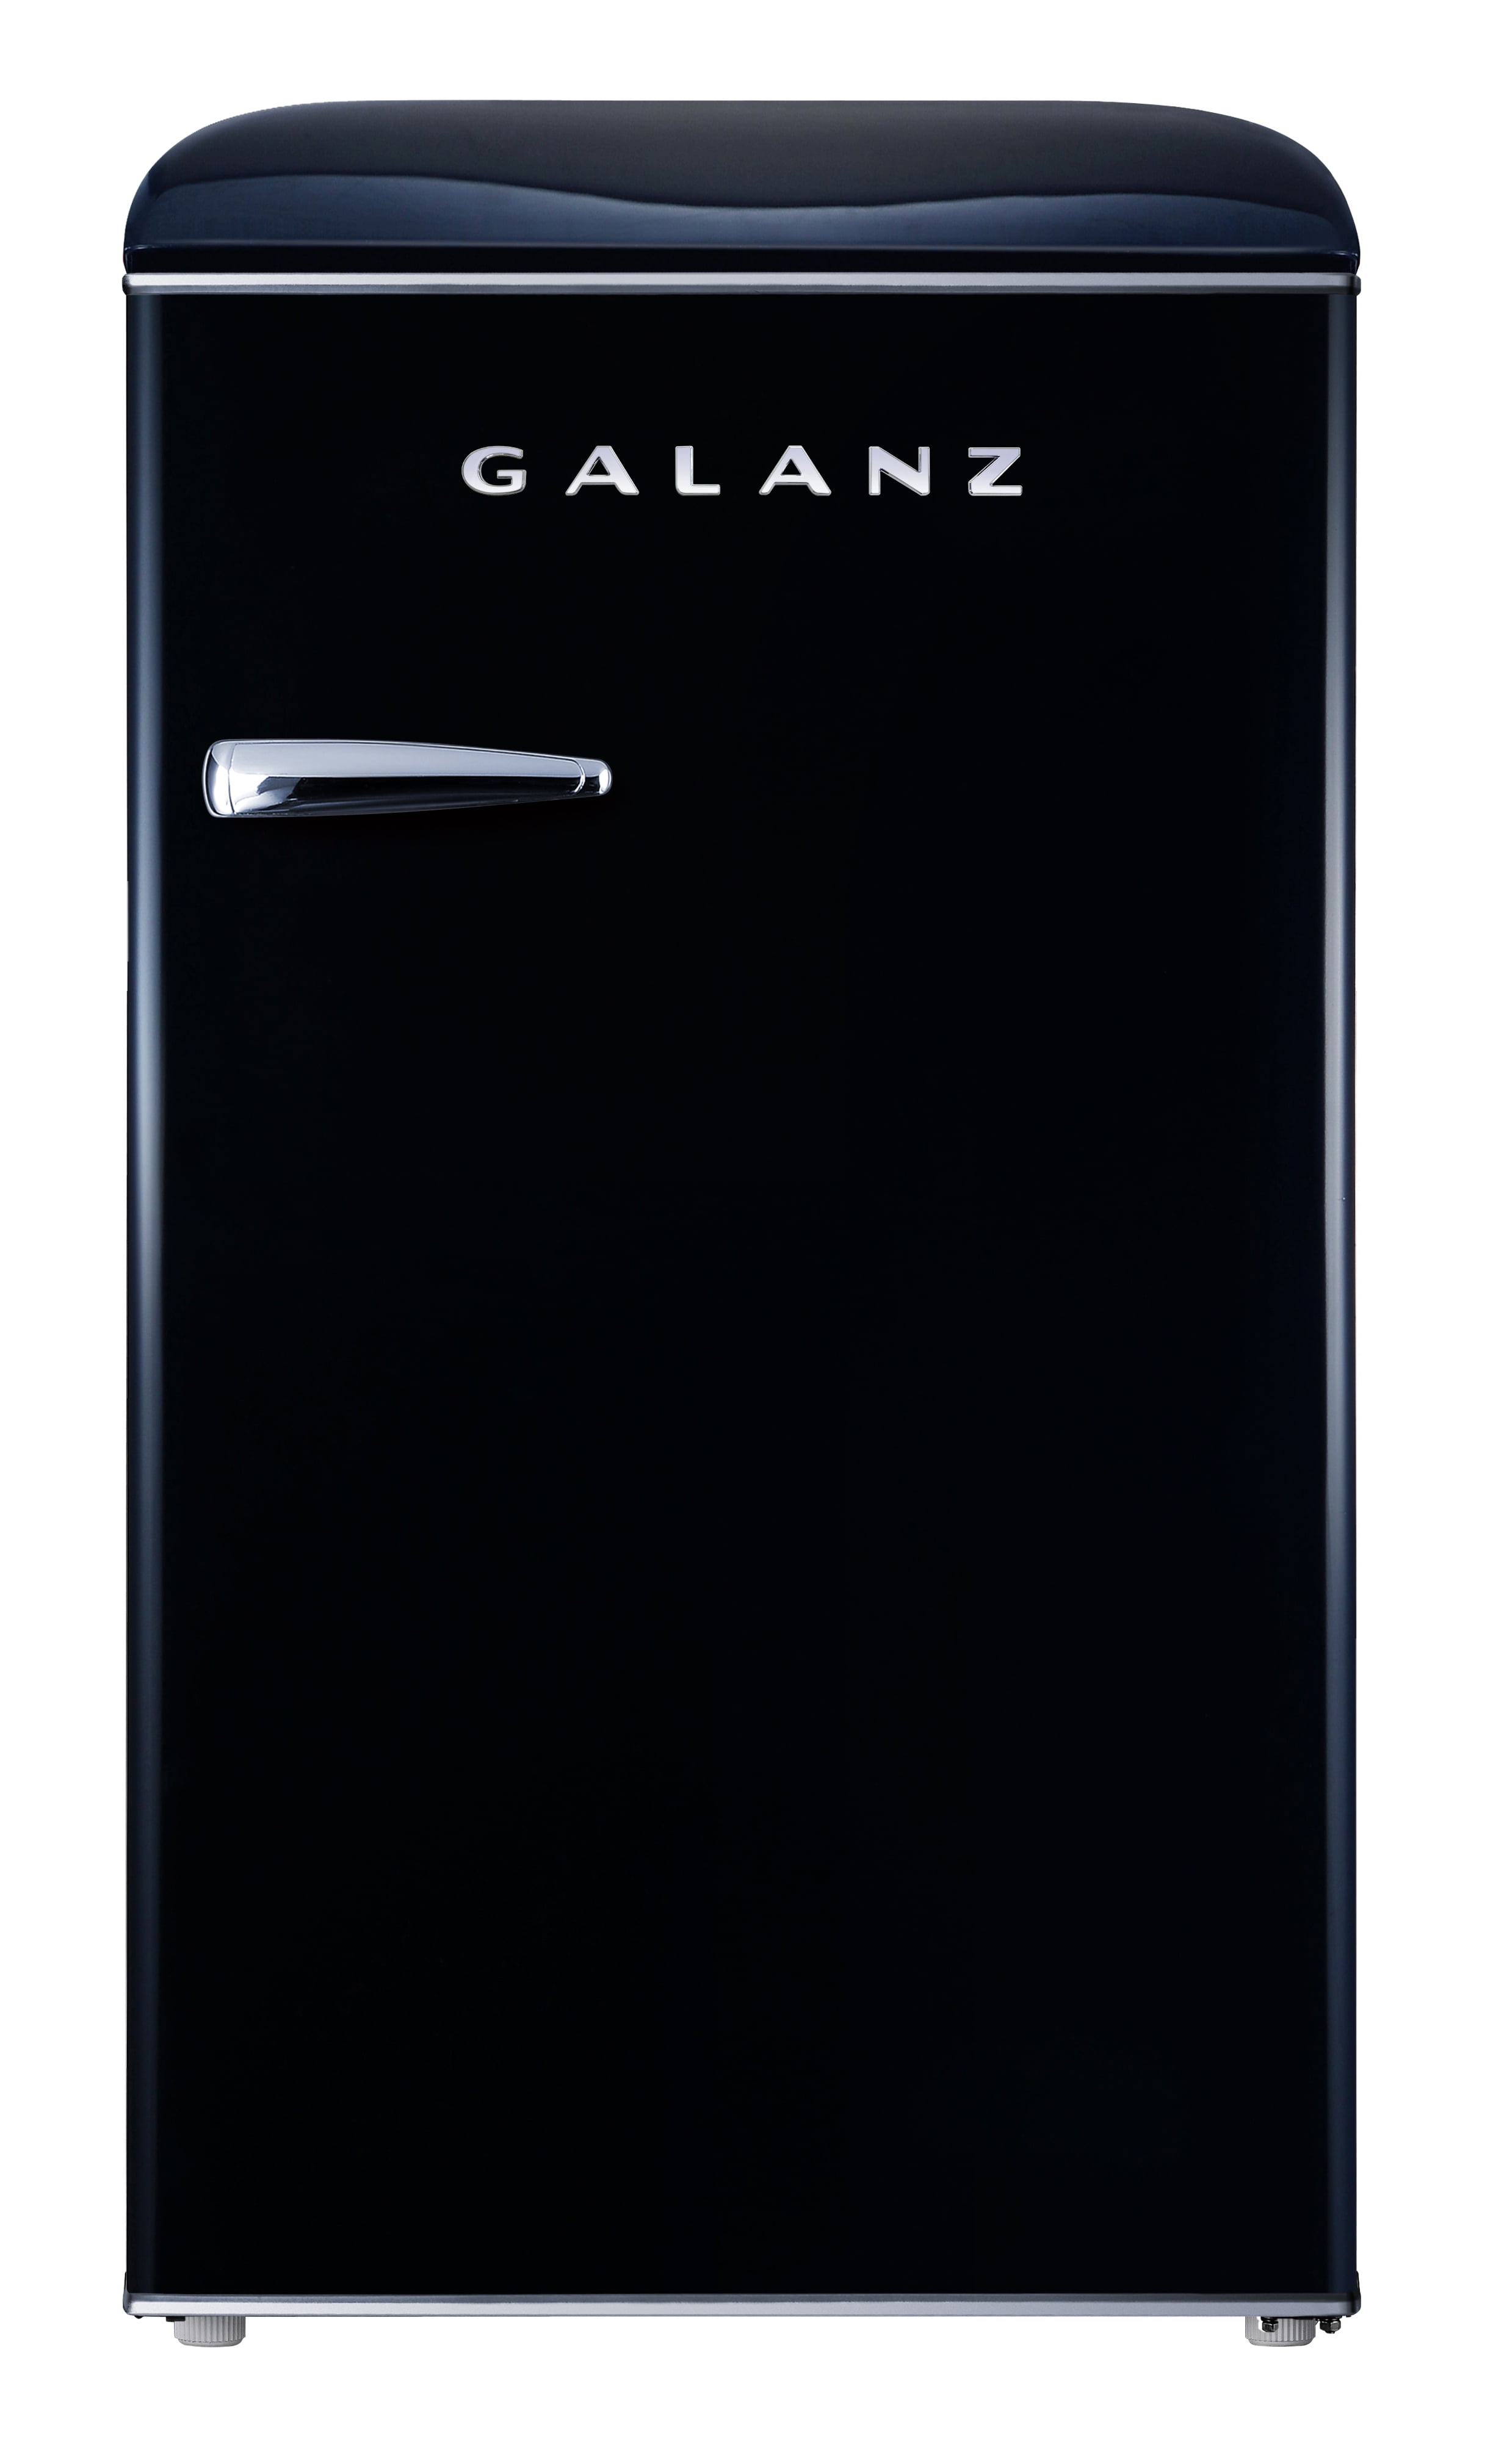 Galanz 3.5 cu ft Retro Single Door Refrigerator, Black - Walmart.com - Walmart.com